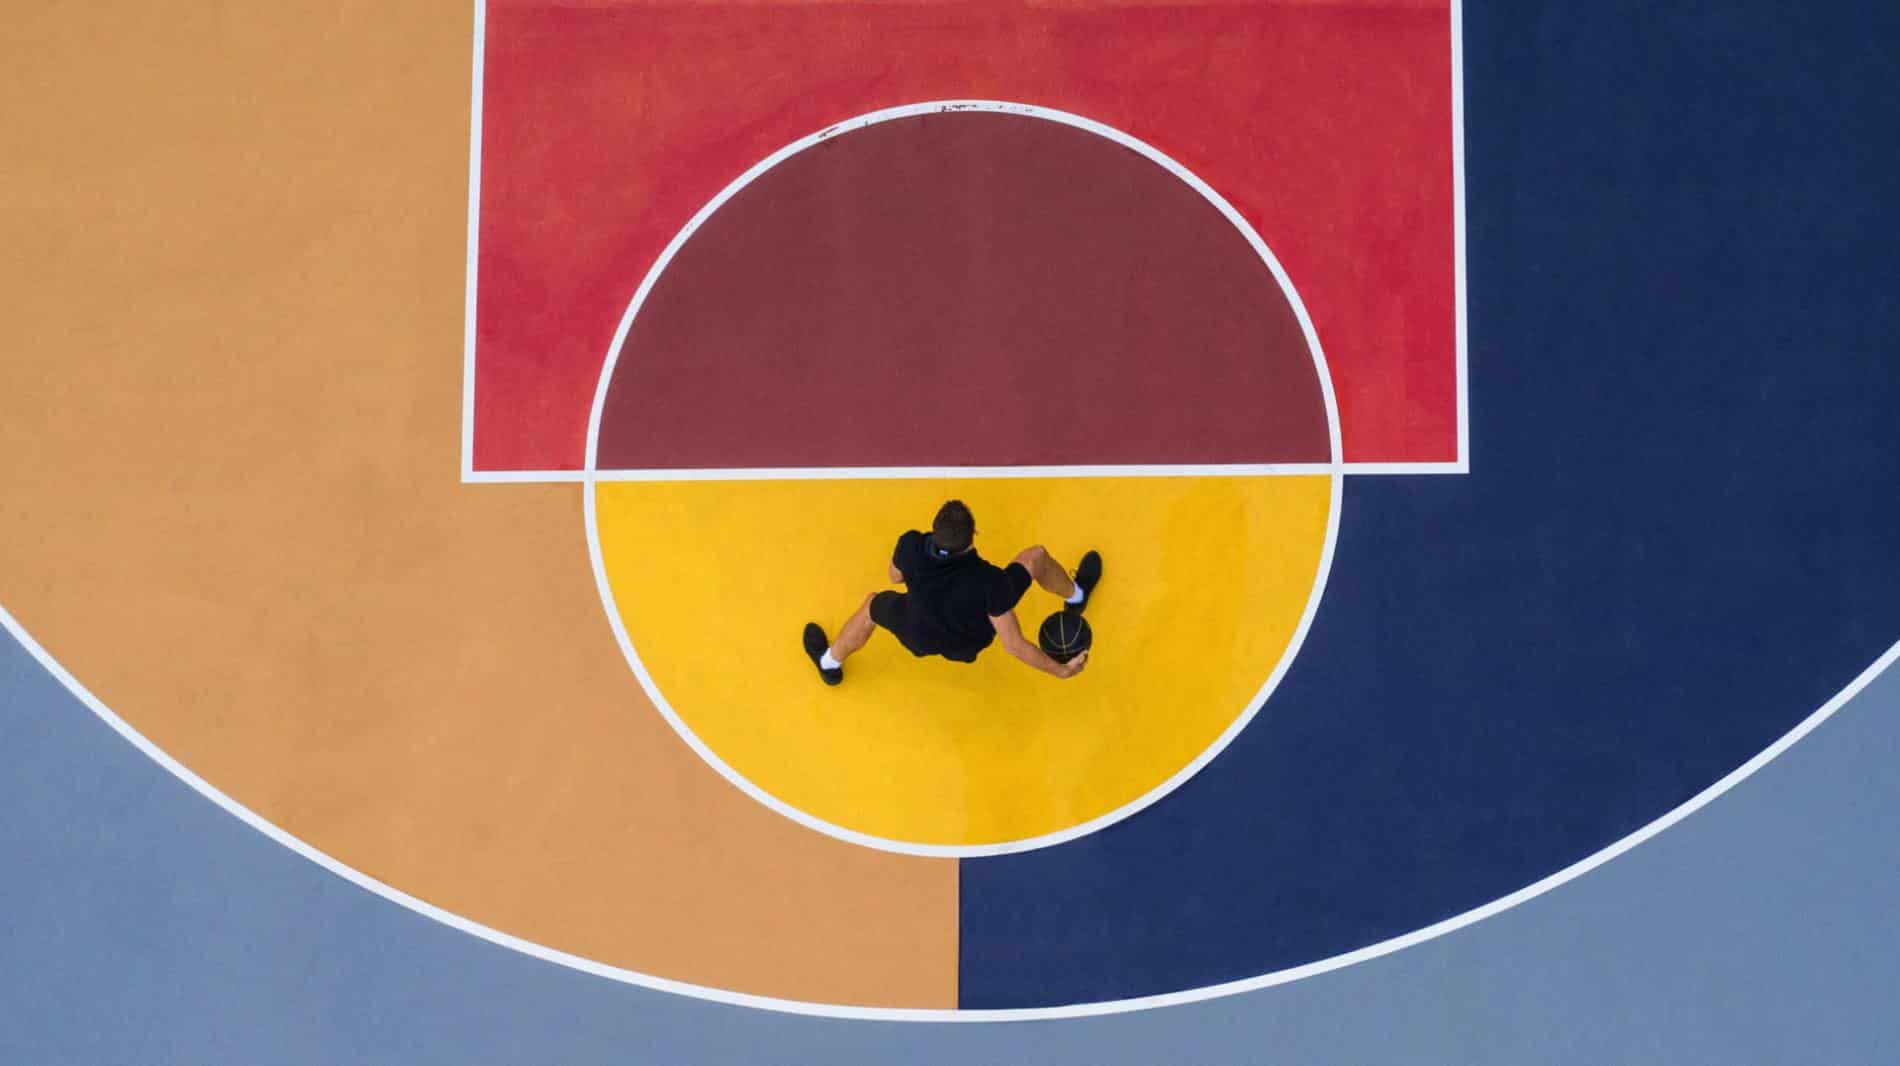 fotografia aerea de persona jugando baloncesto sobre fopndo de colores por Ilanna Barkusky